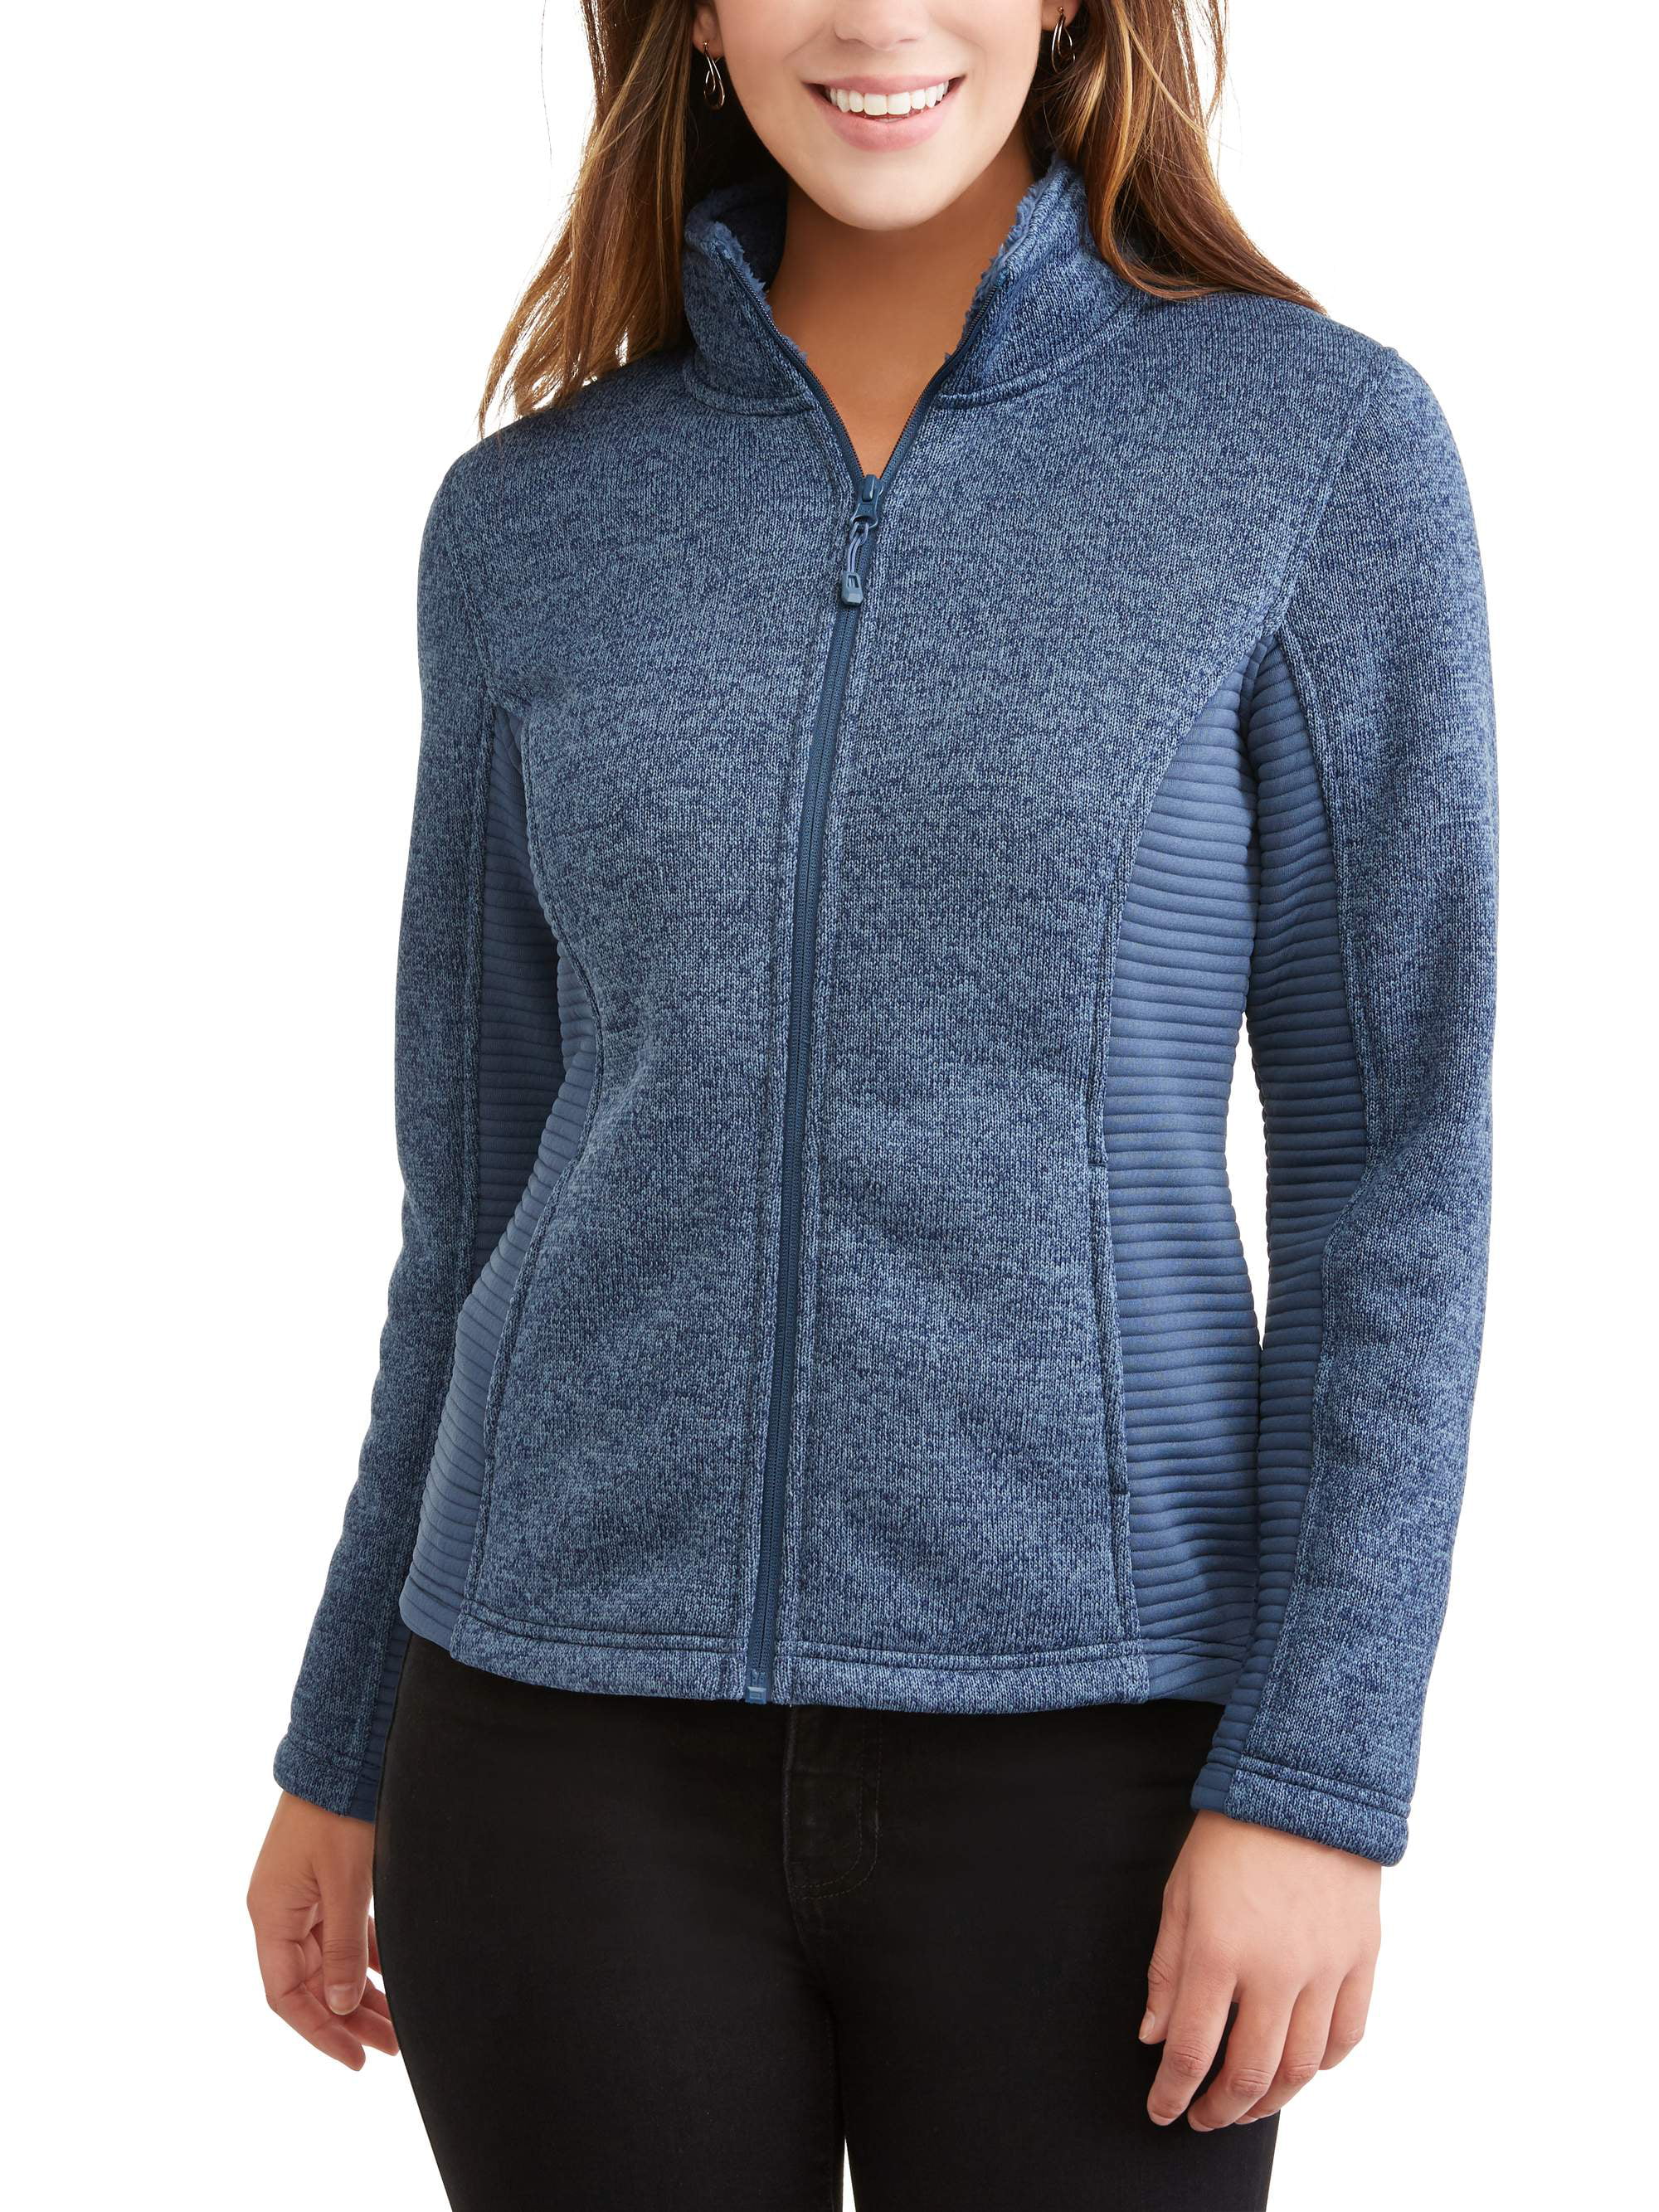 Women's Sweater Fleece Jacket - Walmart.com